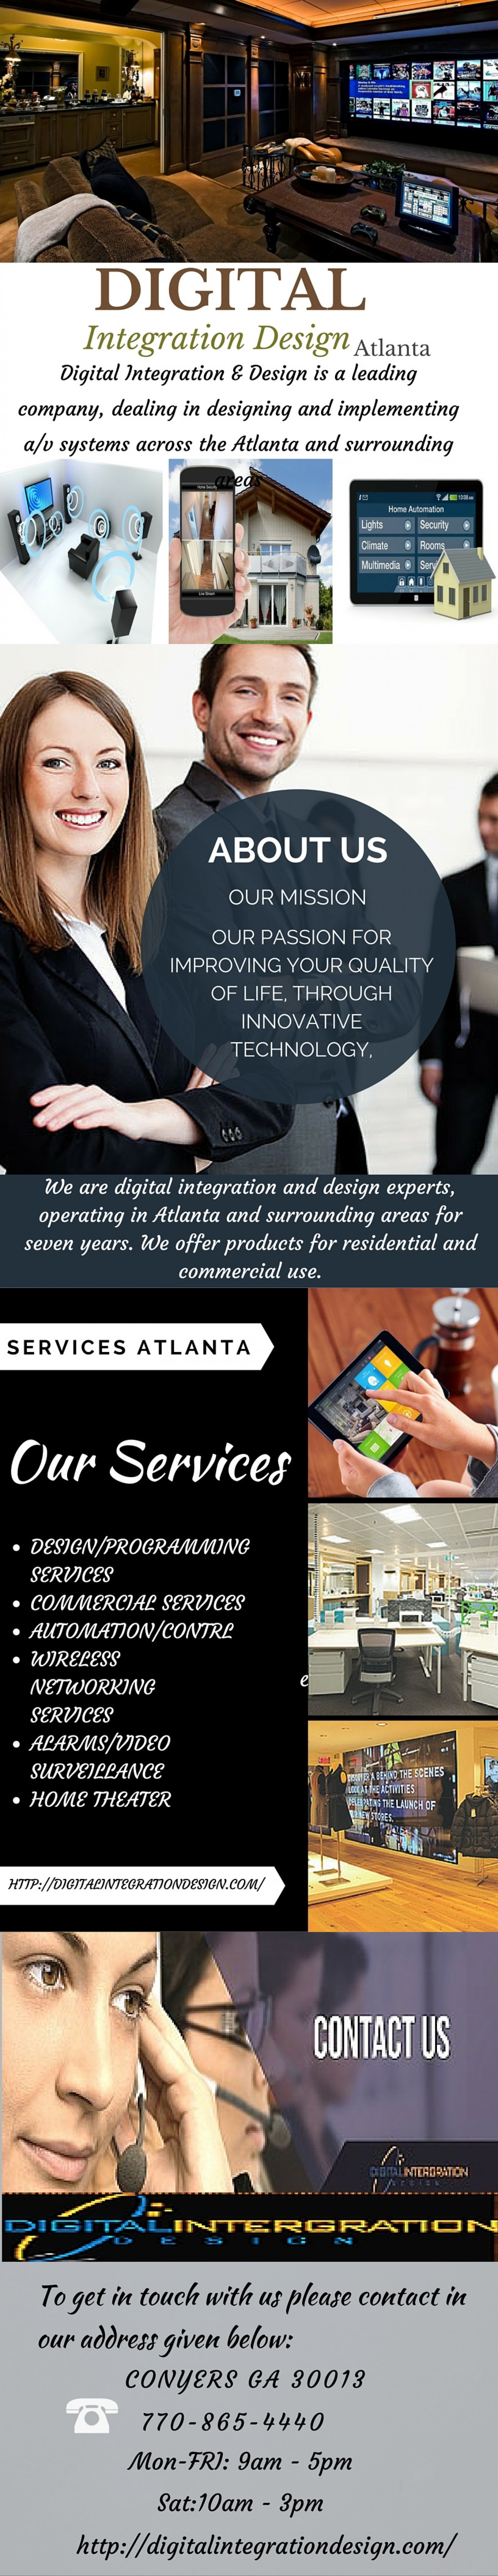 Digital Integration Design Atlanta Infographic